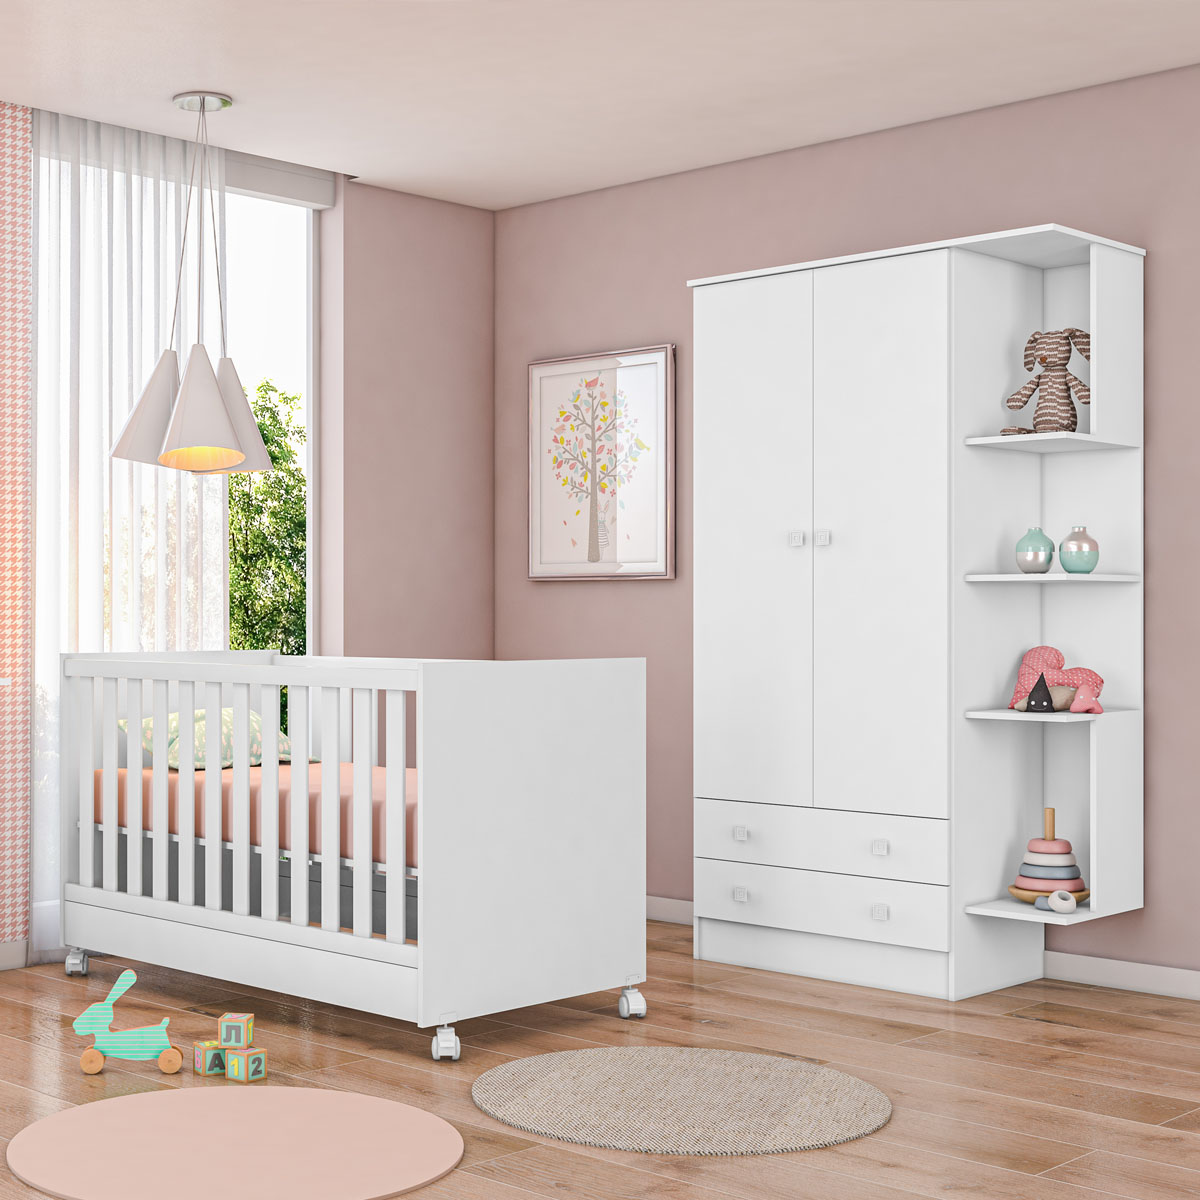 Conjunto Quarto Bebê Guarda-Roupa 2 Portas e Berço Multifuncional 2x1 Vira Cama Branco - Qmovi